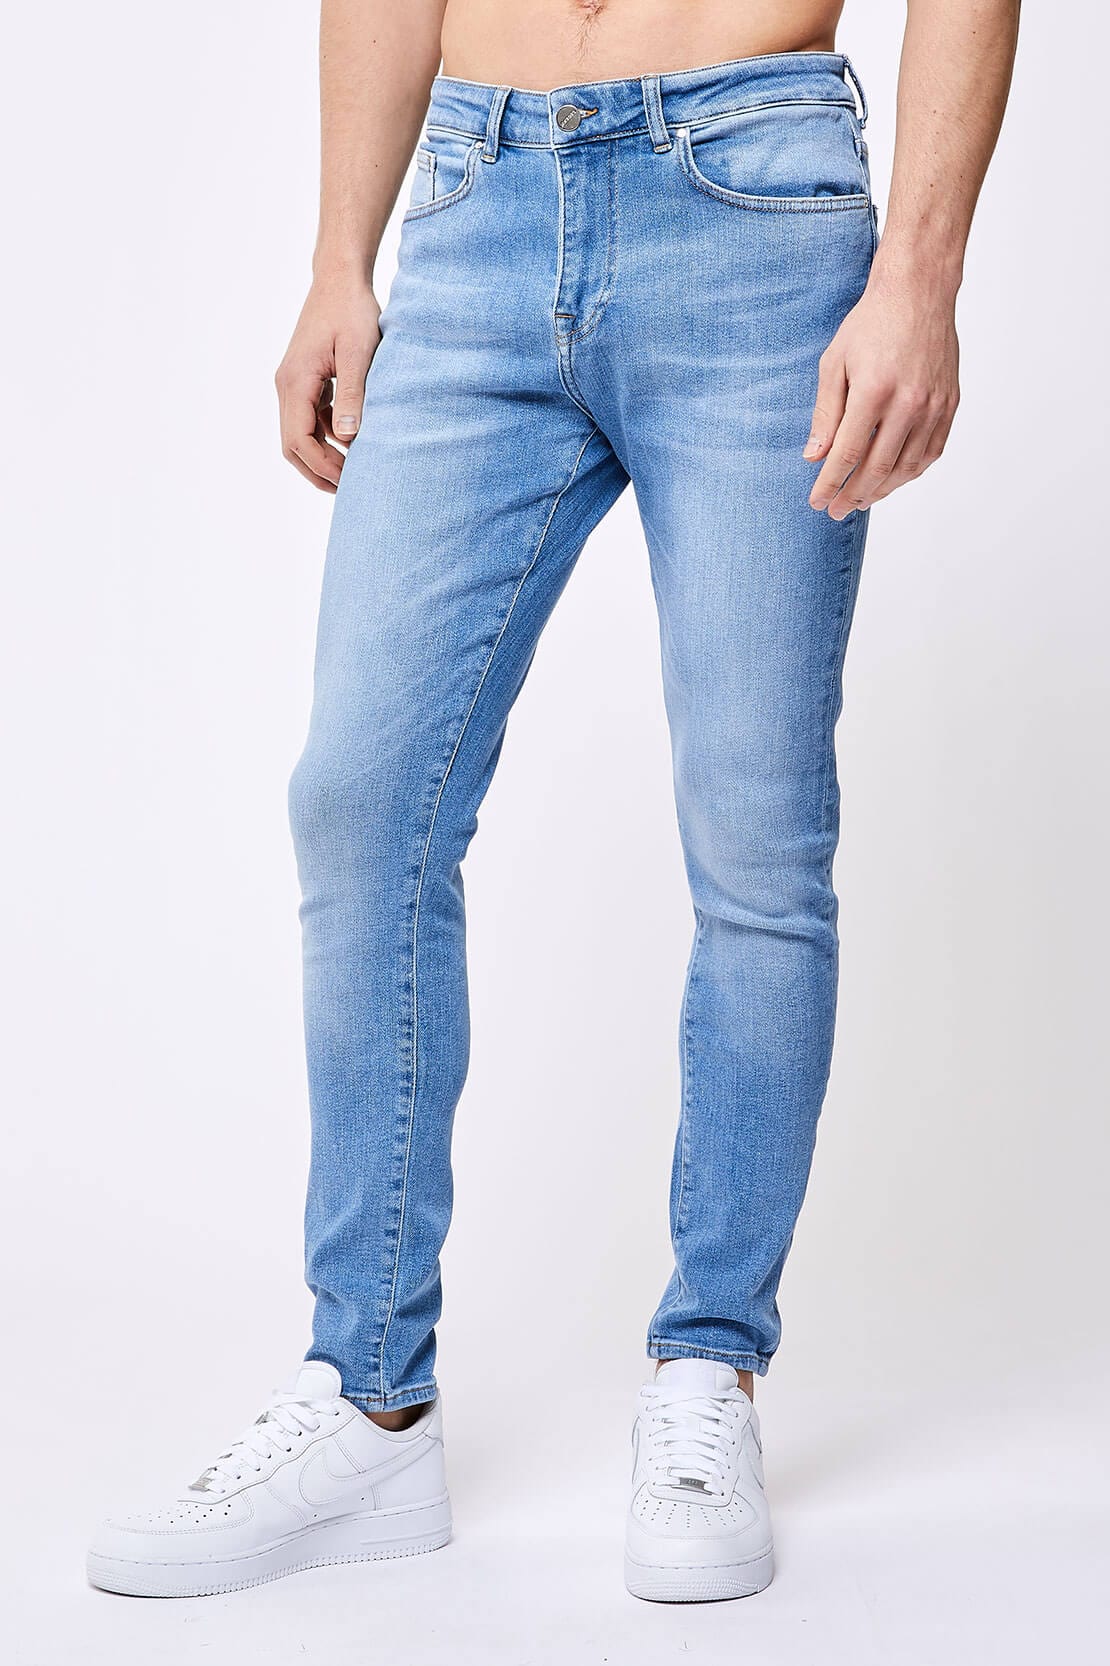 Legend London Jeans SKINNY FIT JEANS - ESSENTIAL BLUE DENIM